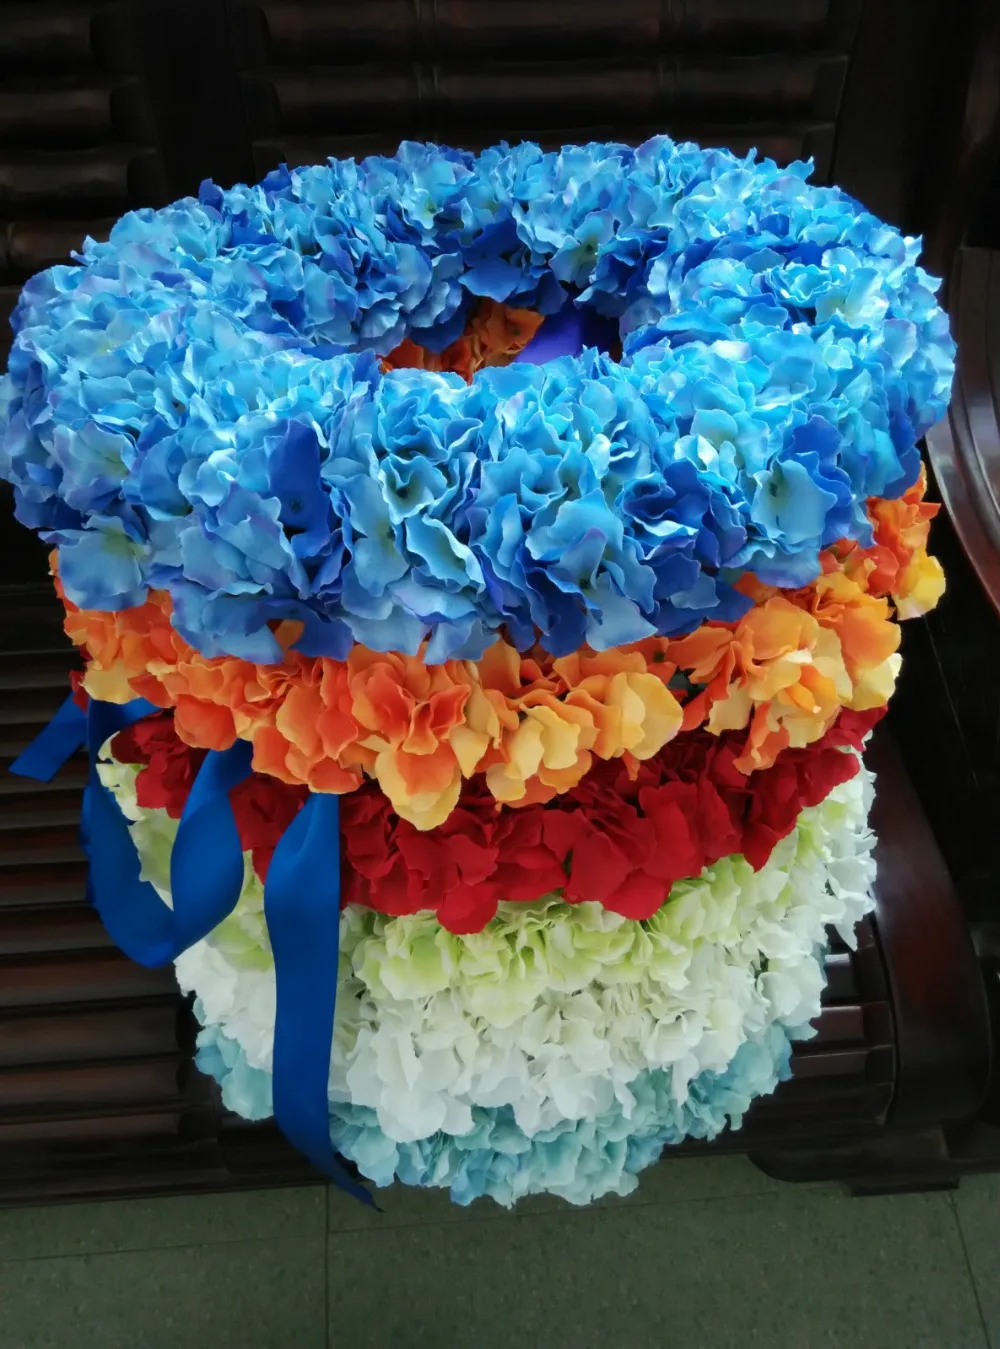 Image blue hydrangea wreaths,front door wreath 20 inches,wedding party birthday decoration flowers